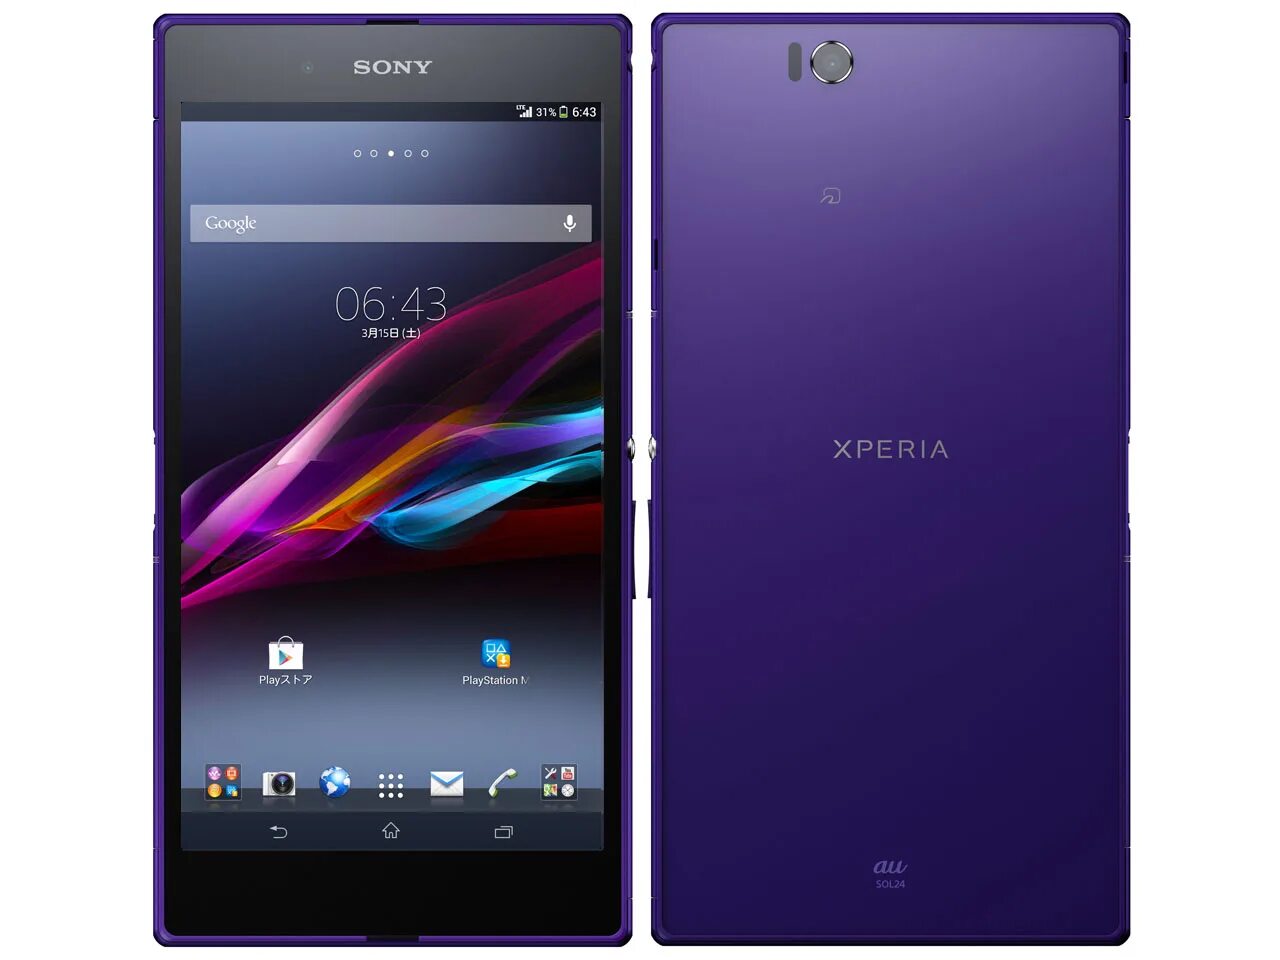 Google sony xperia. Sony Xperia z Ultra. Sony Xperia z2 Ultra. Sony Xperia z Ultra c6833 Walkman. Sony Xperia j9110.